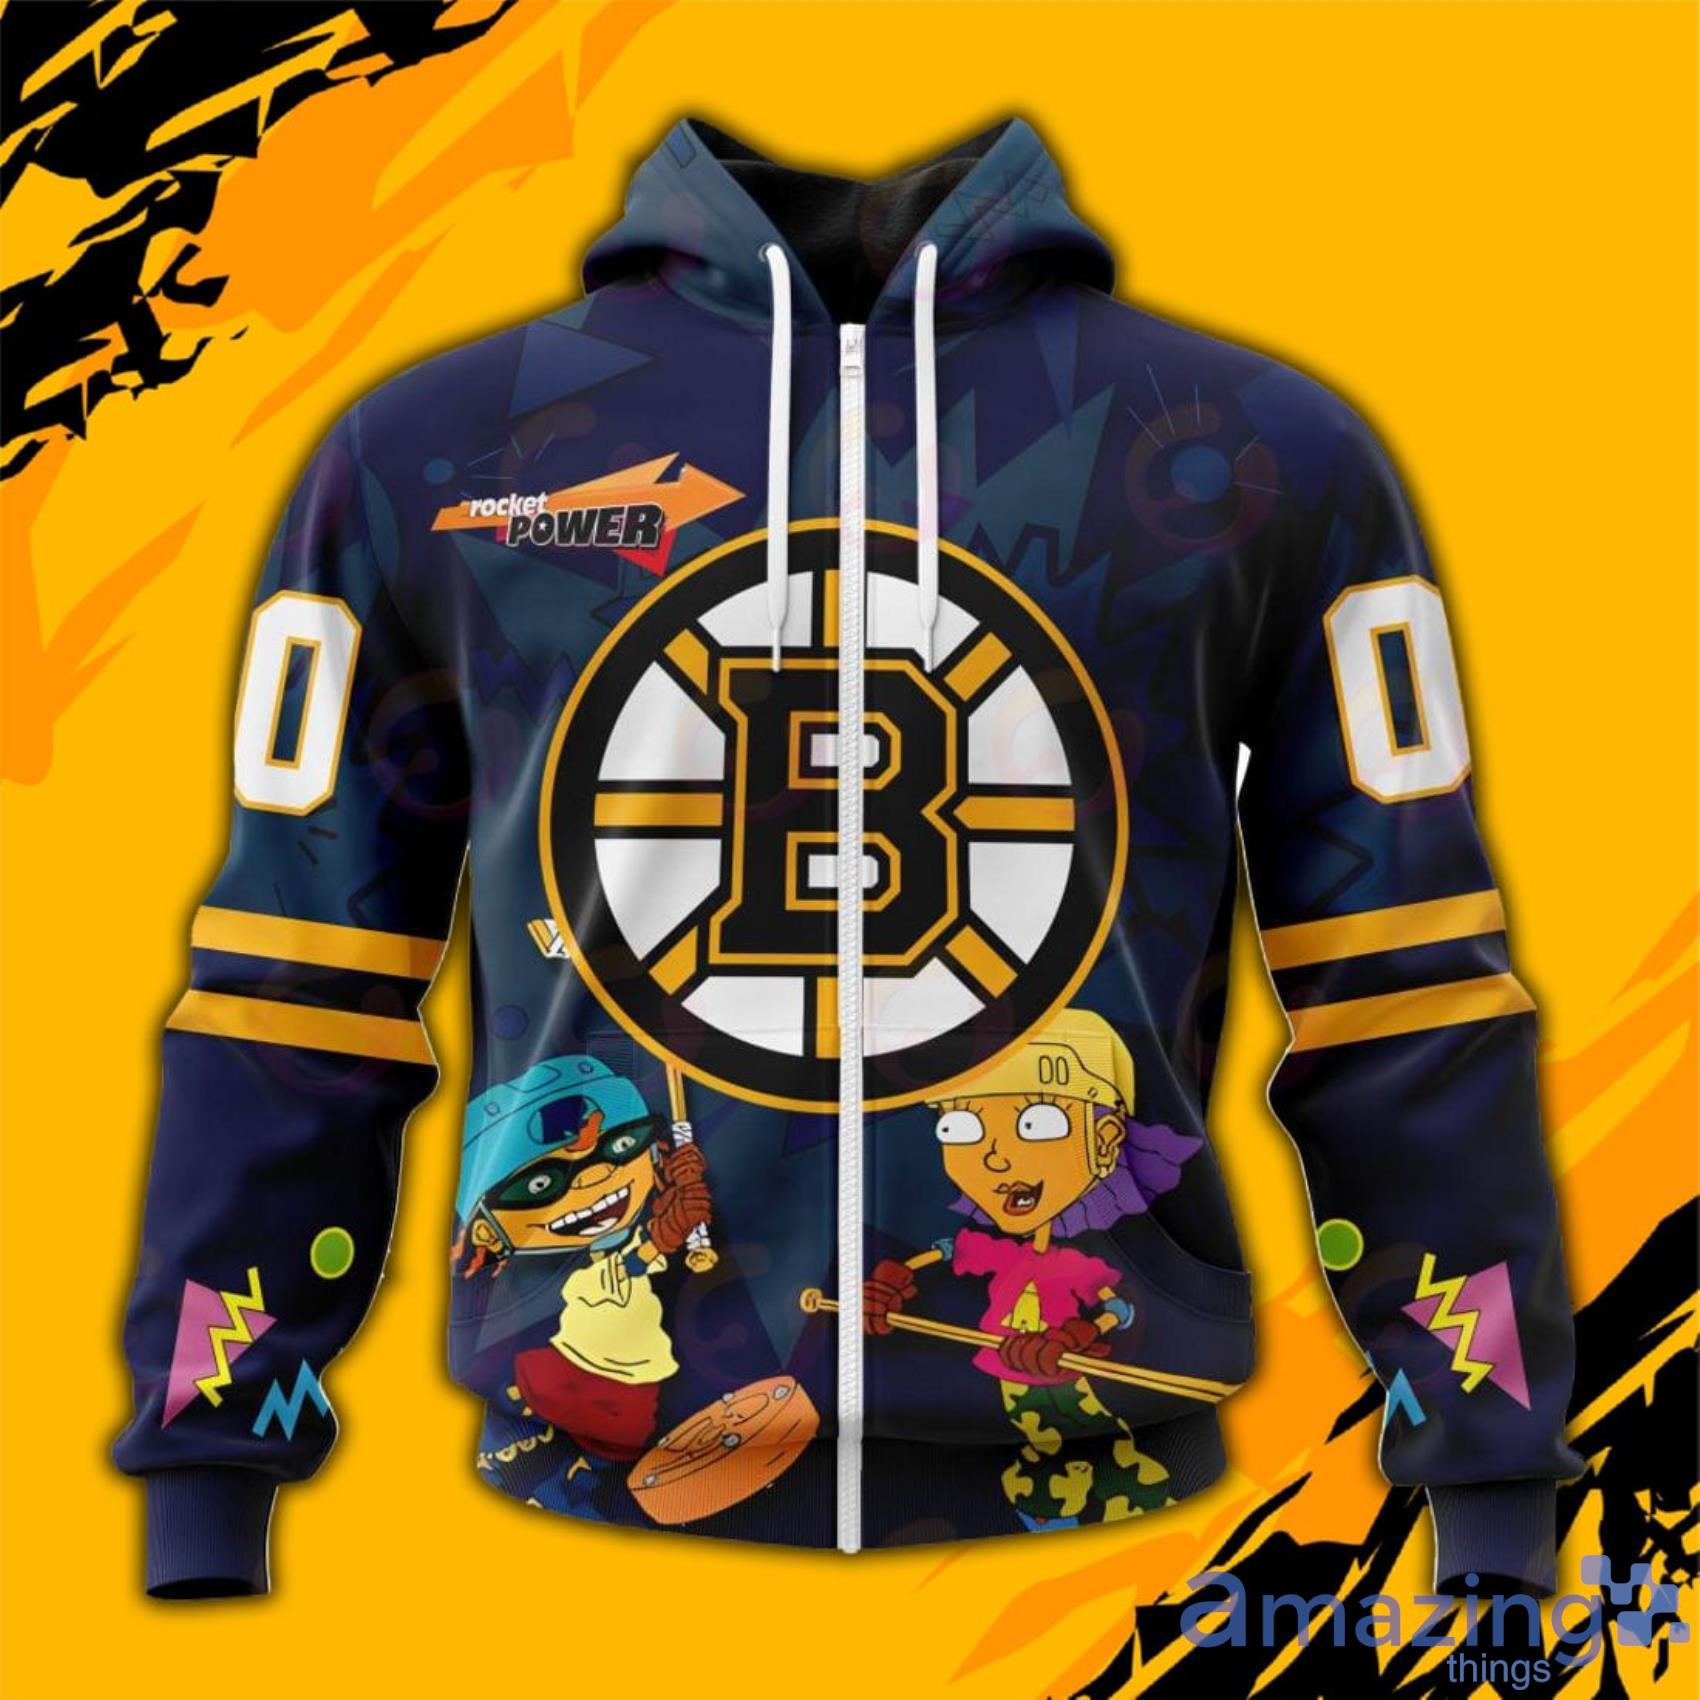 Boston Bruins custom jersey